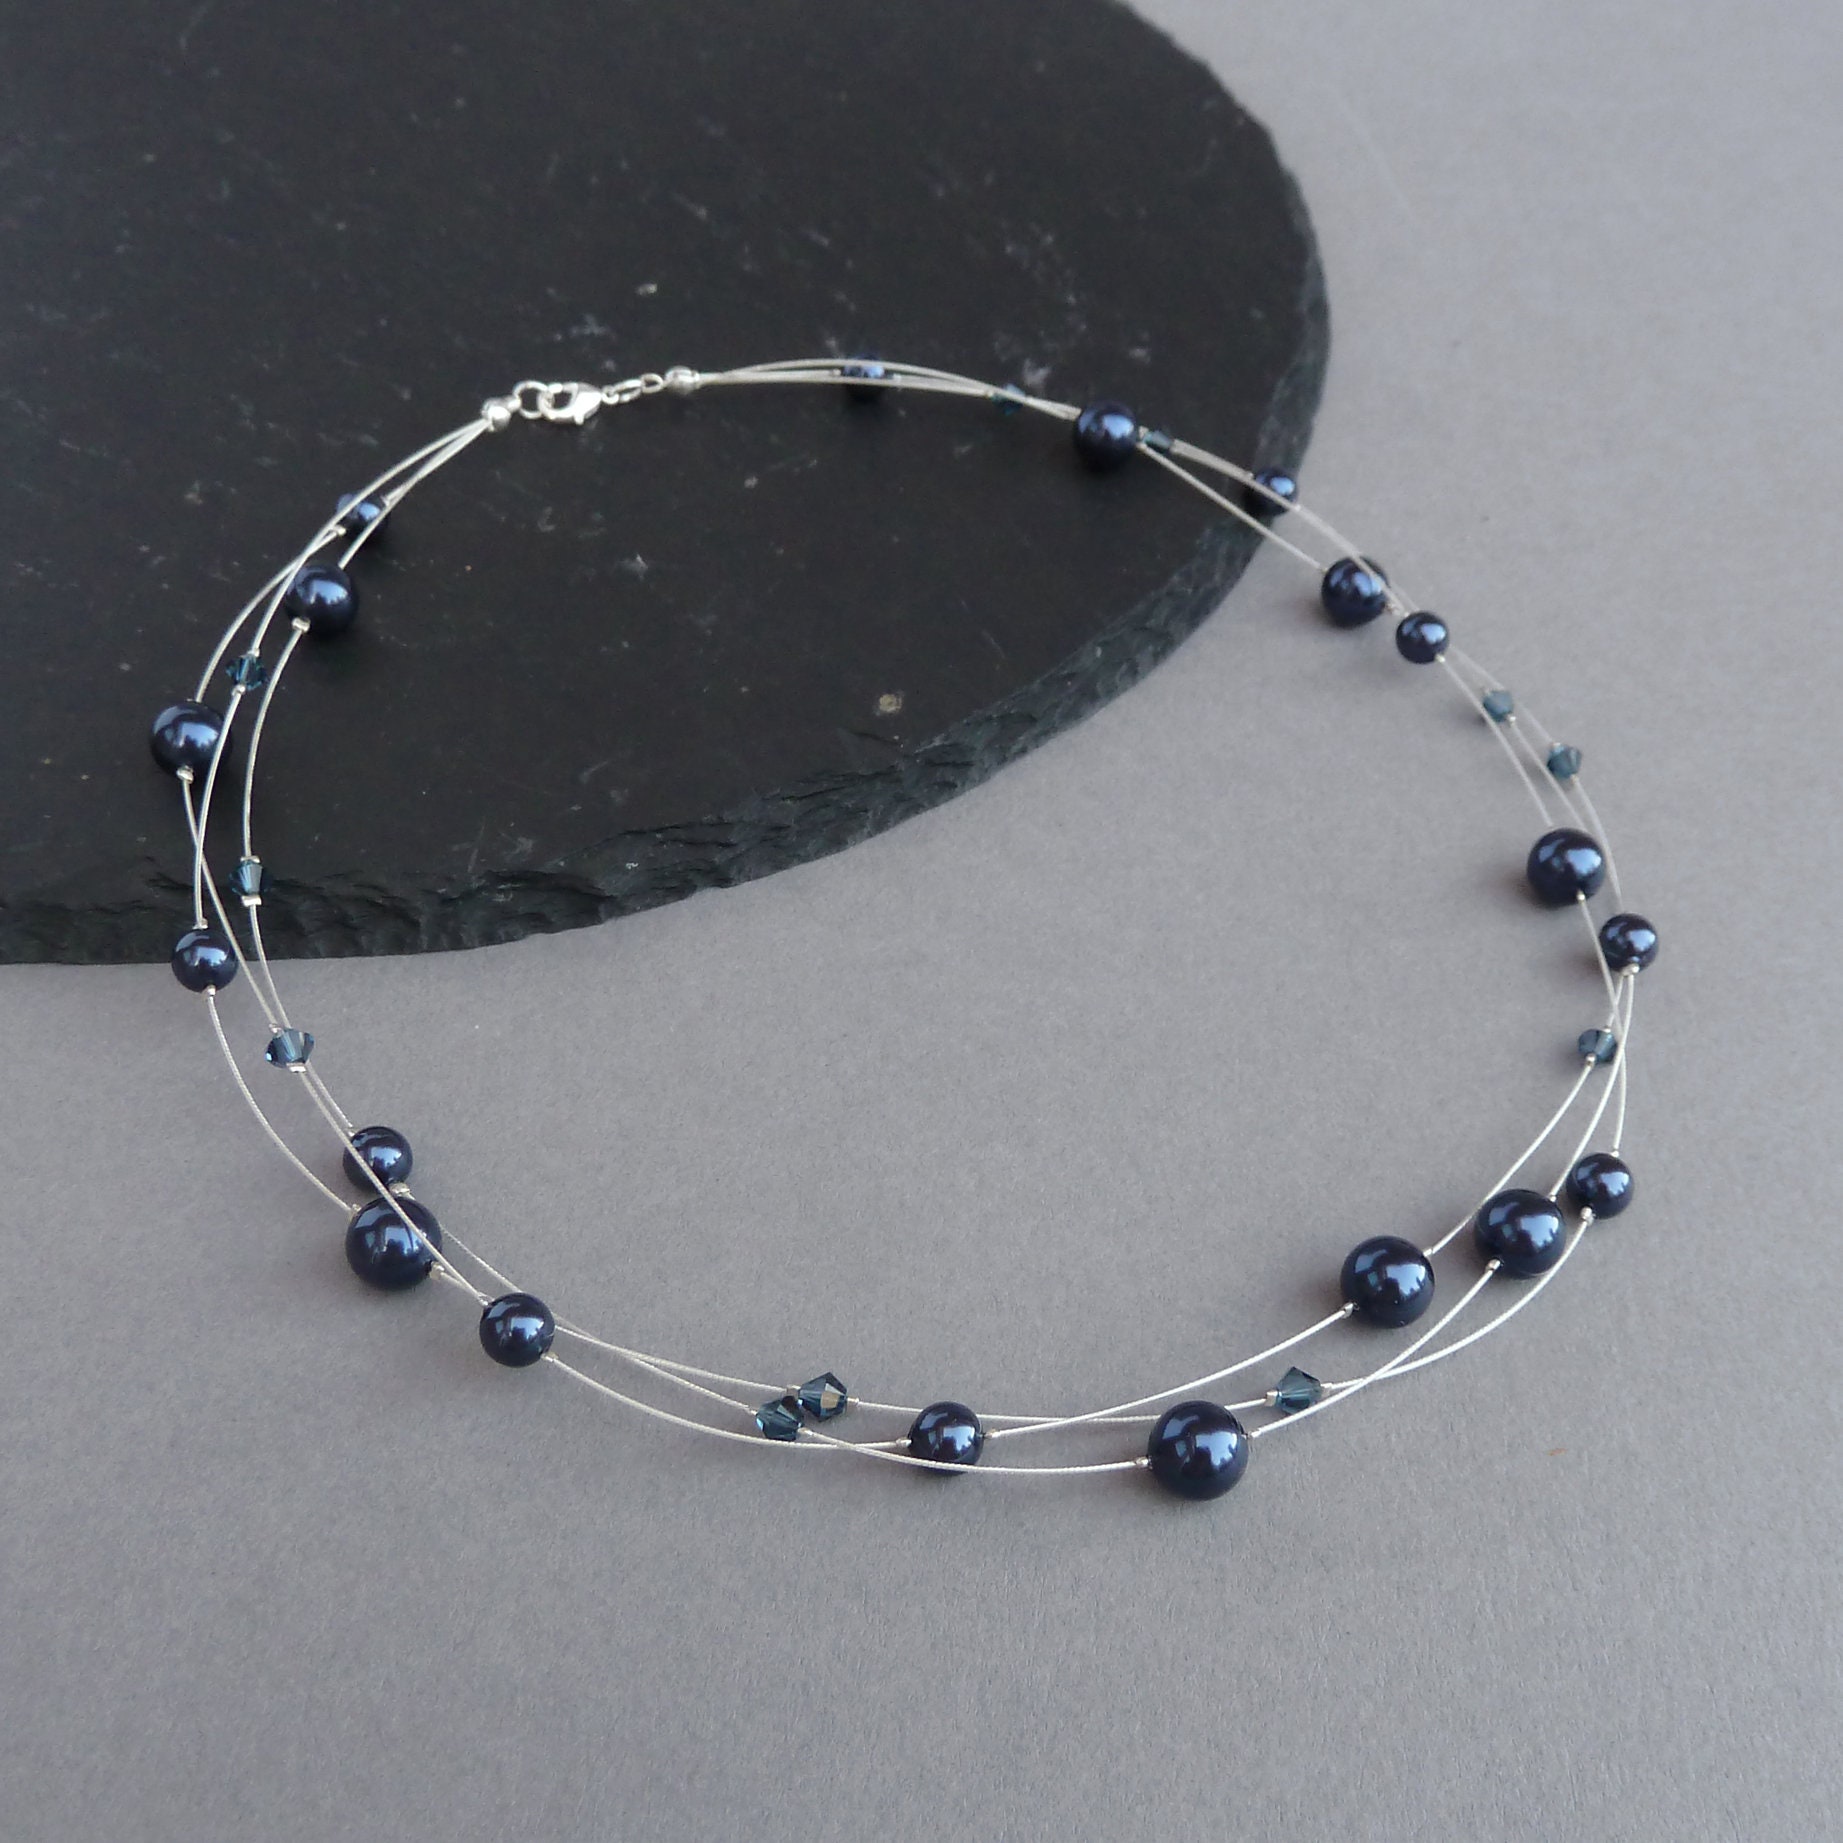 Wholesale! Last stock! 1PCS 9-10MM Dark Blue Freshwater Pearl Necklace 18